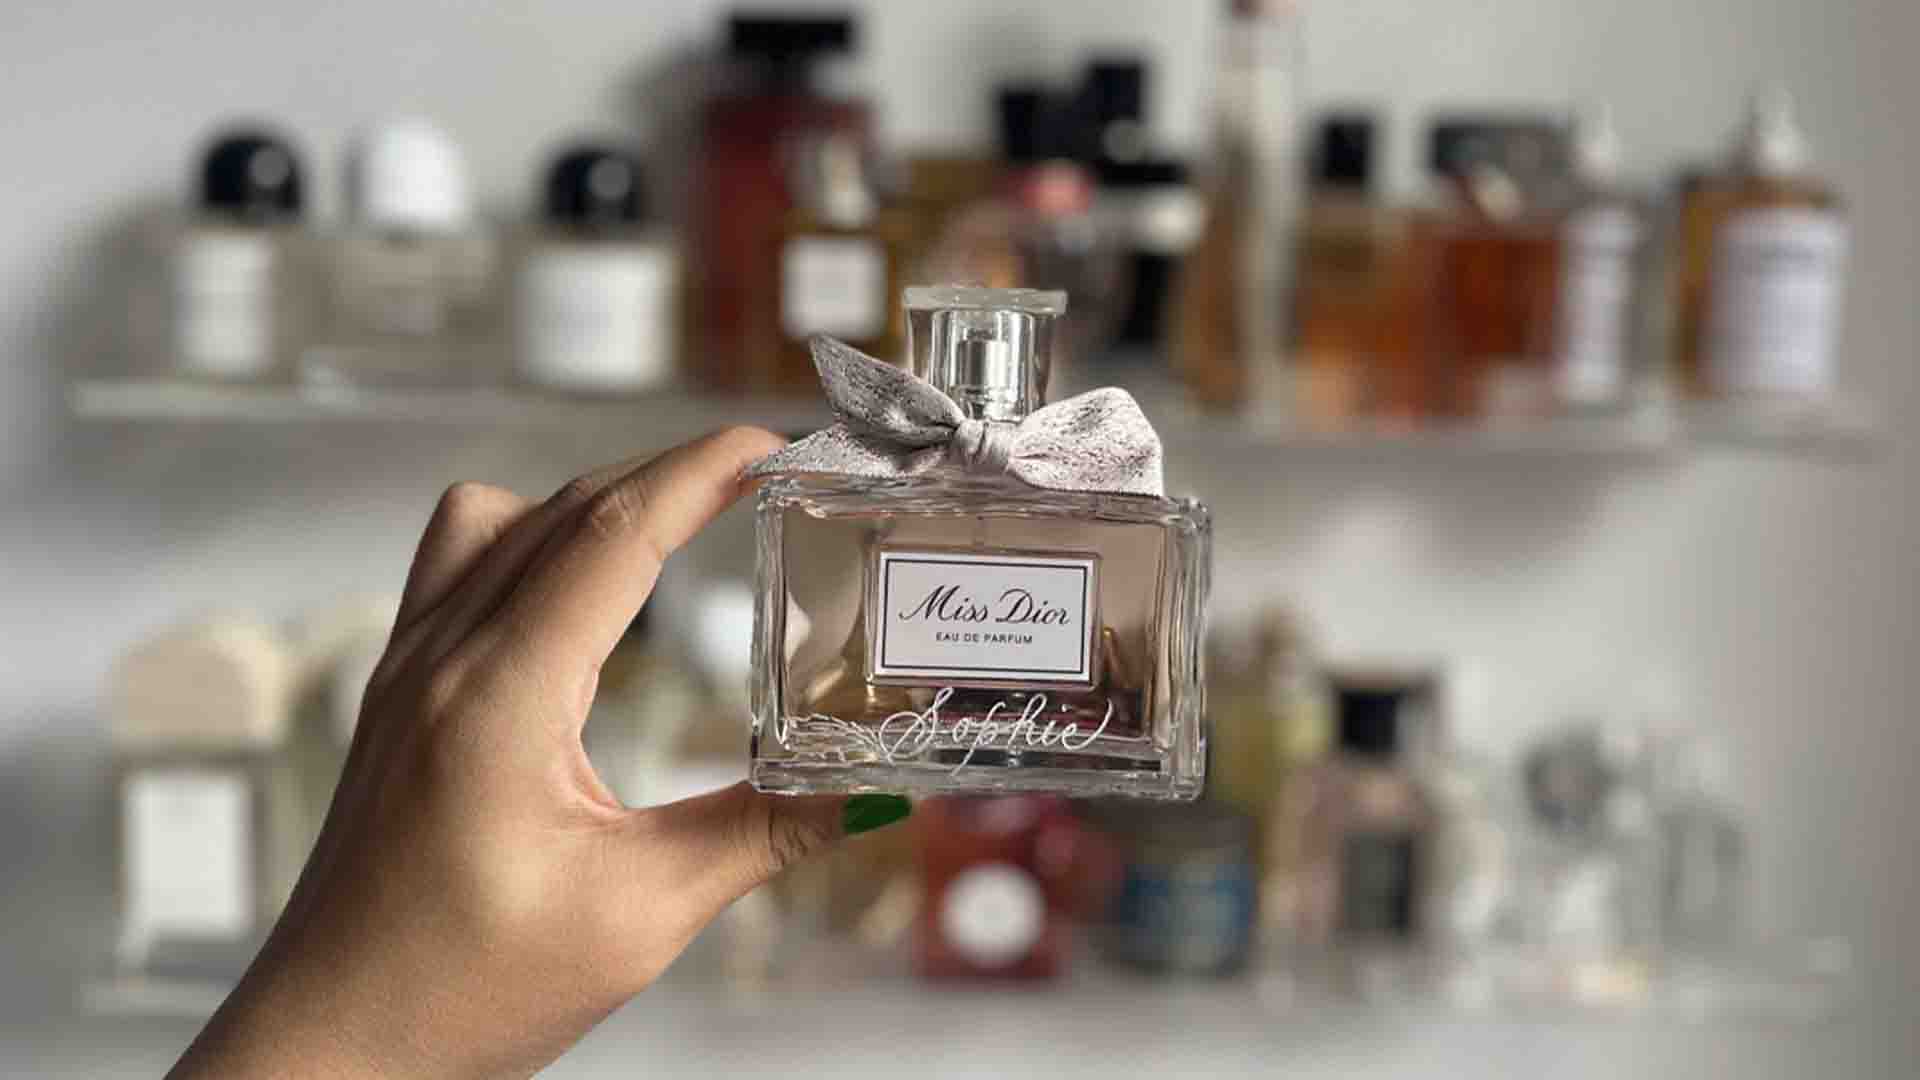 Romance Perfume